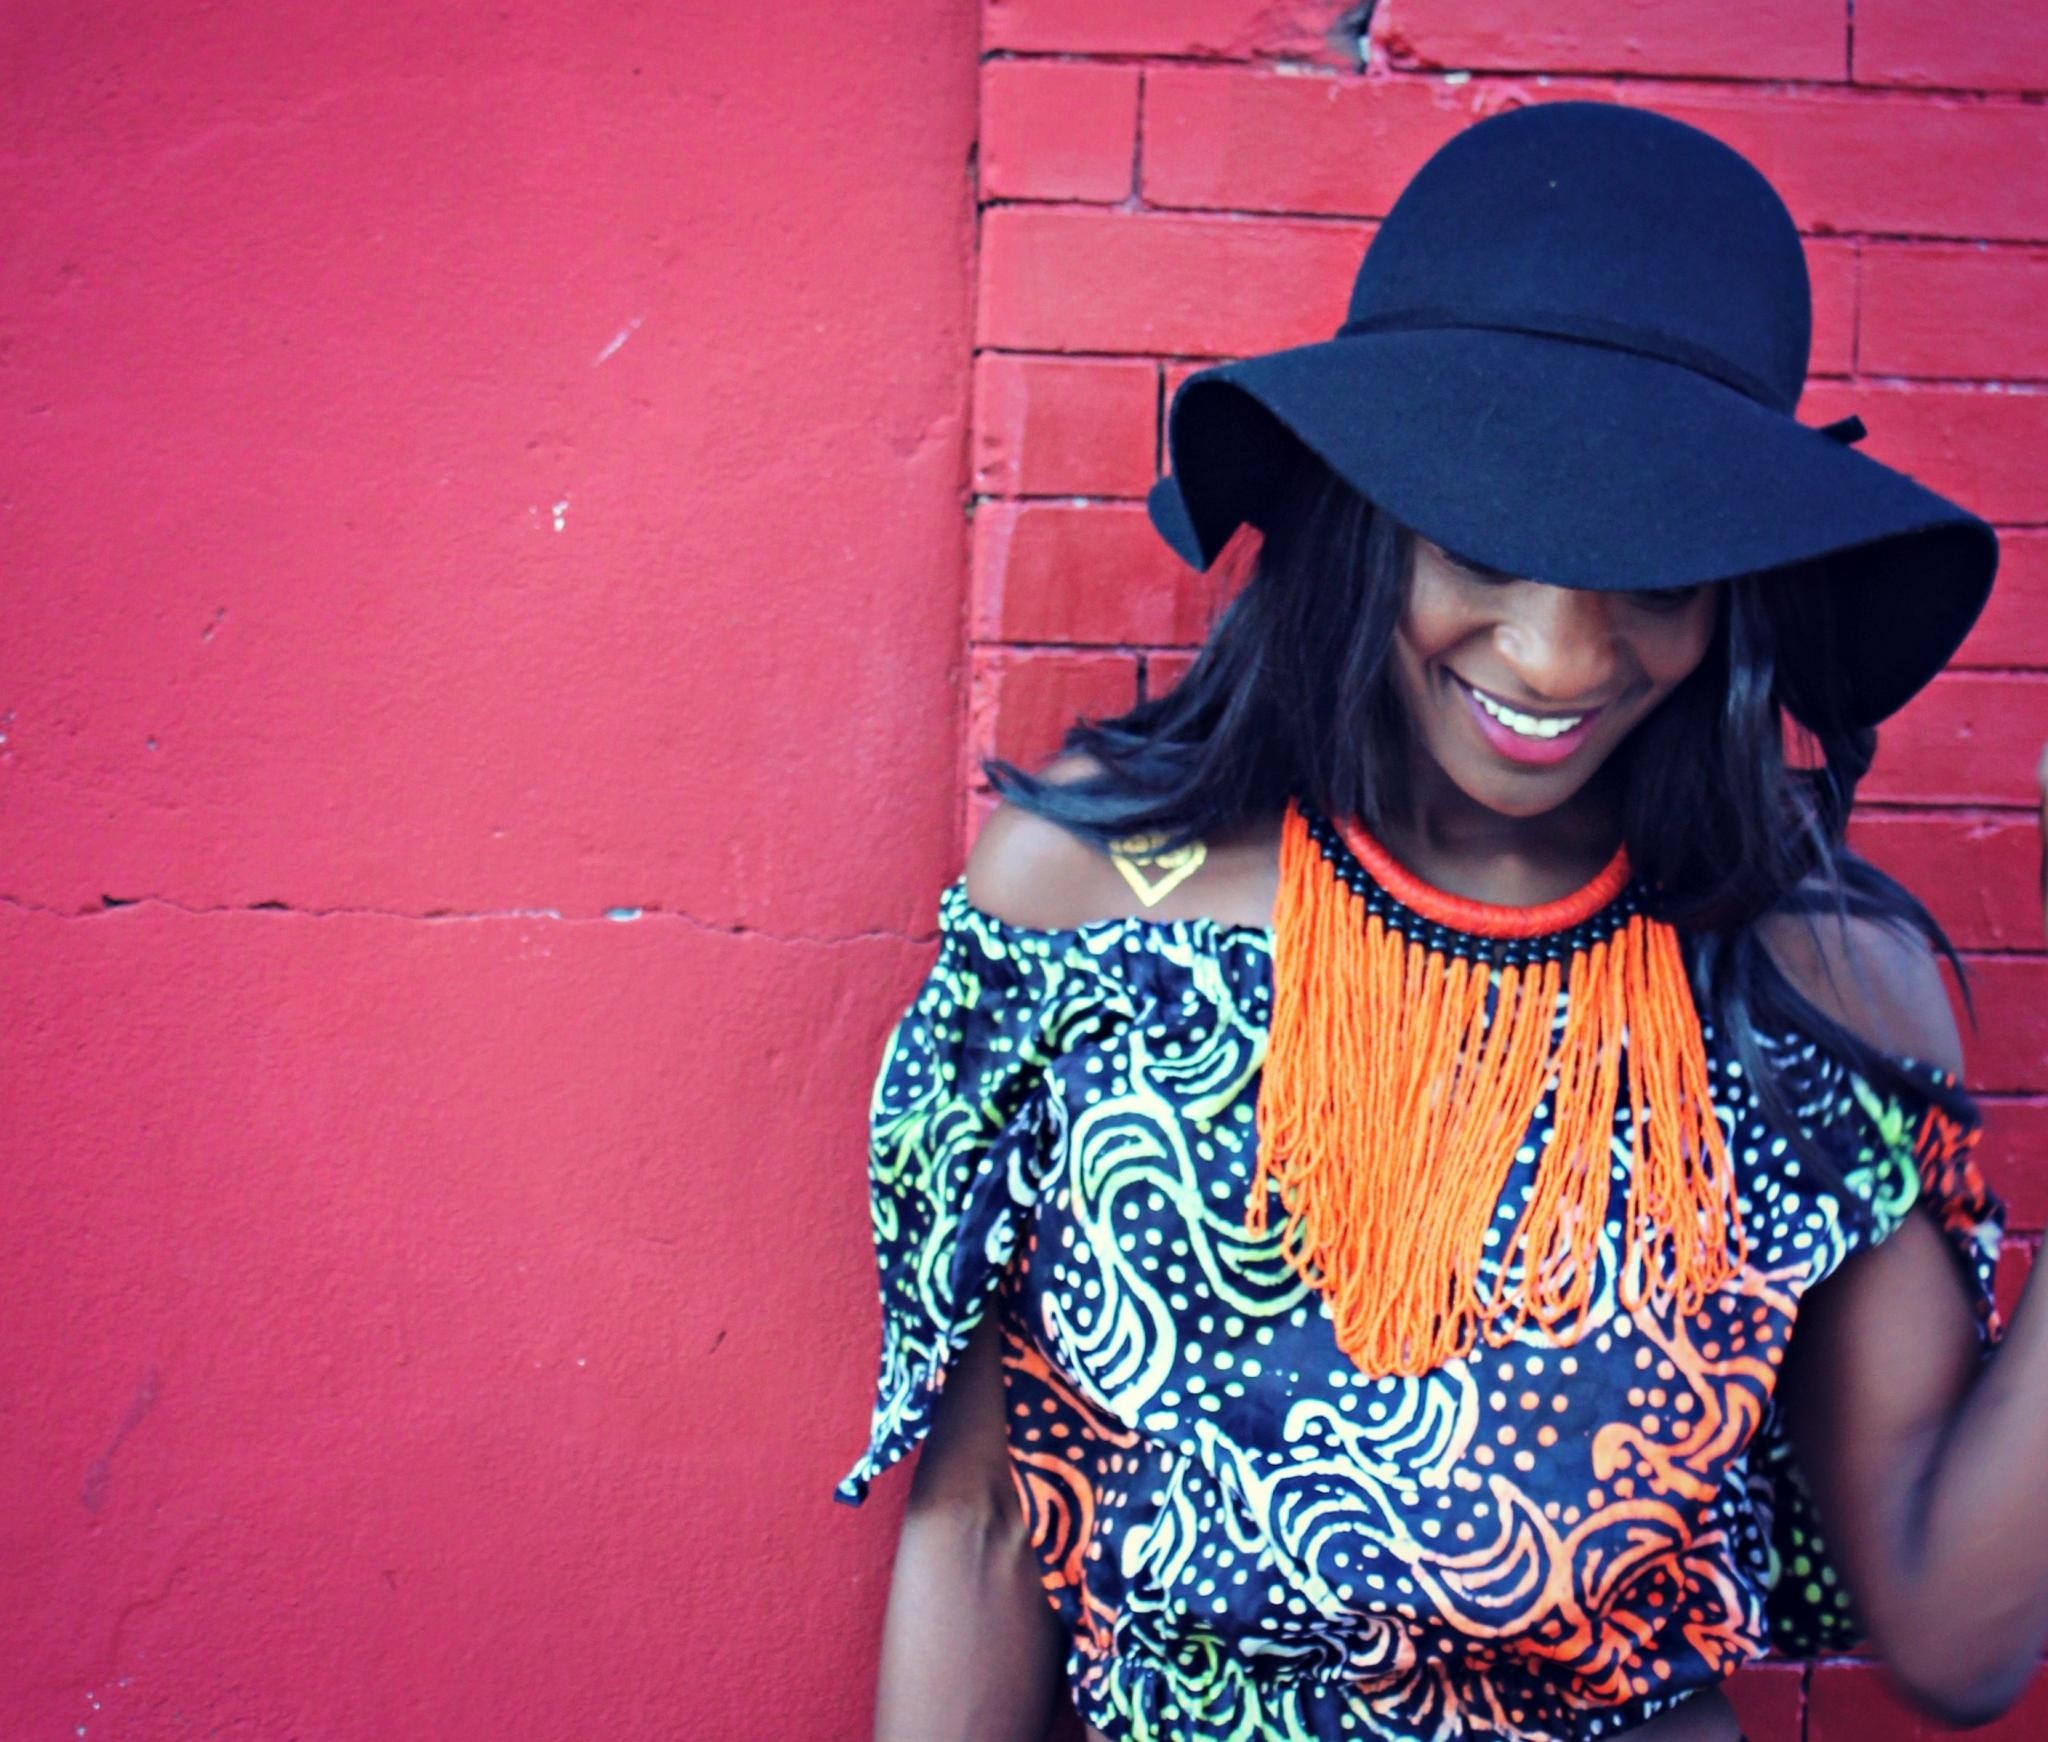 Ankara off-shoulder elastic-dress, African print dress, African